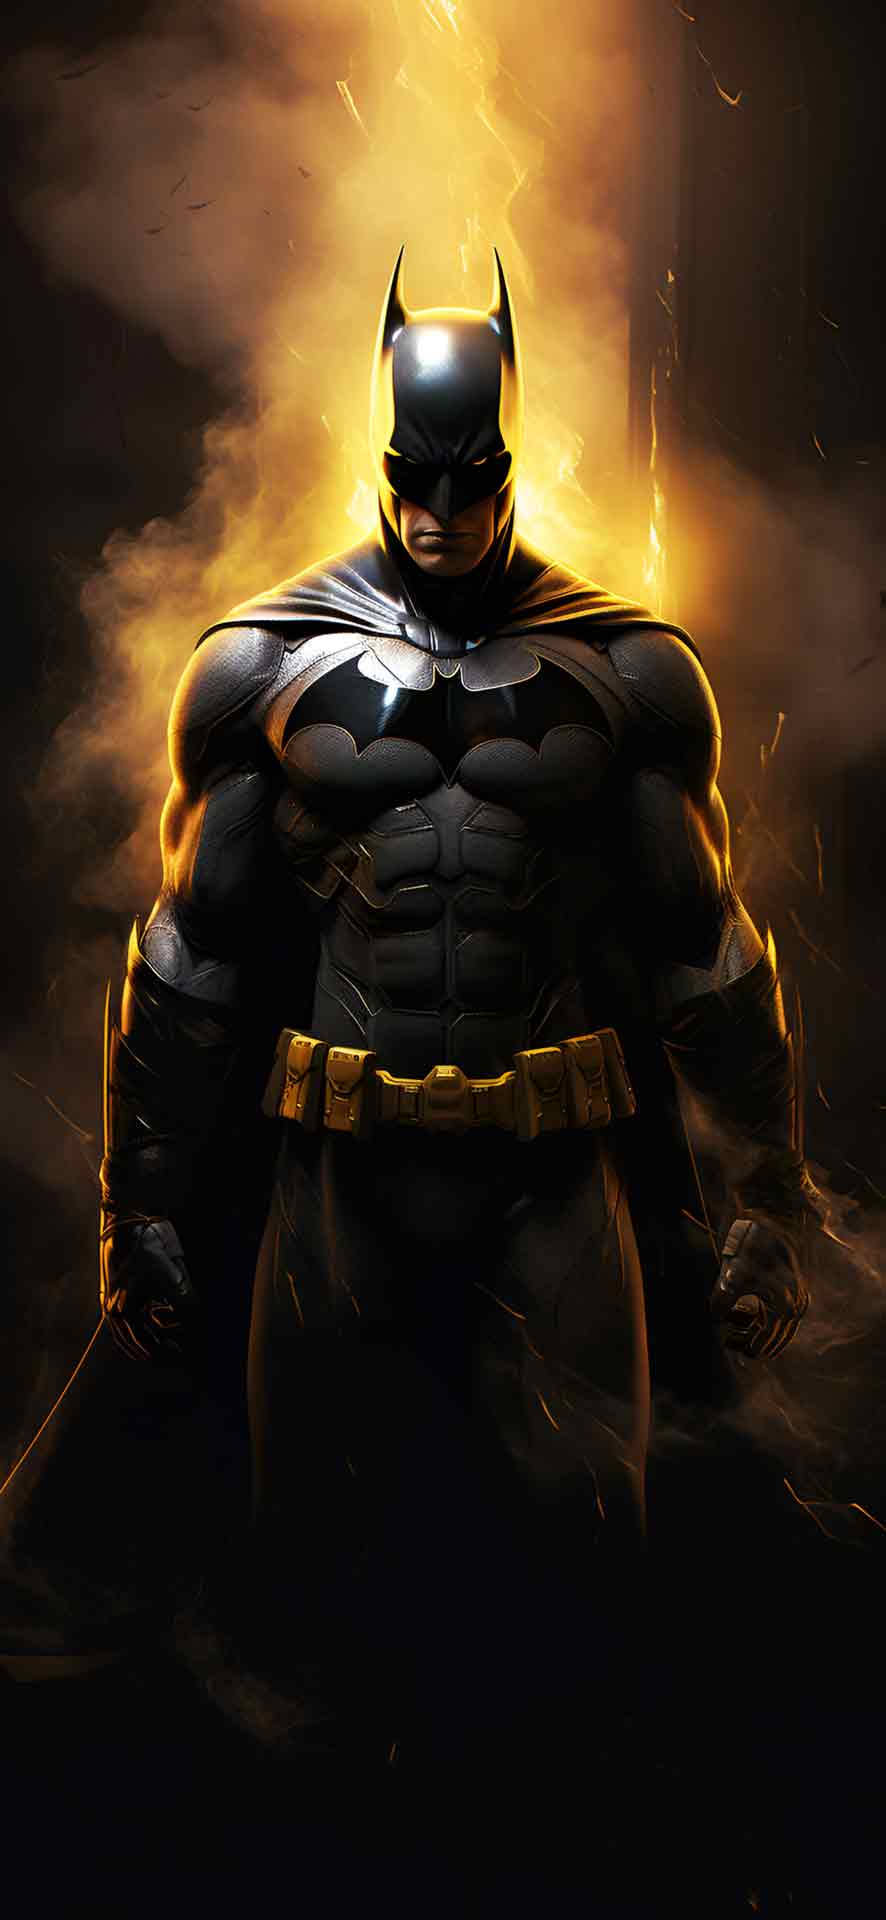 DC蝙蝠侠从迷雾壁纸中出现